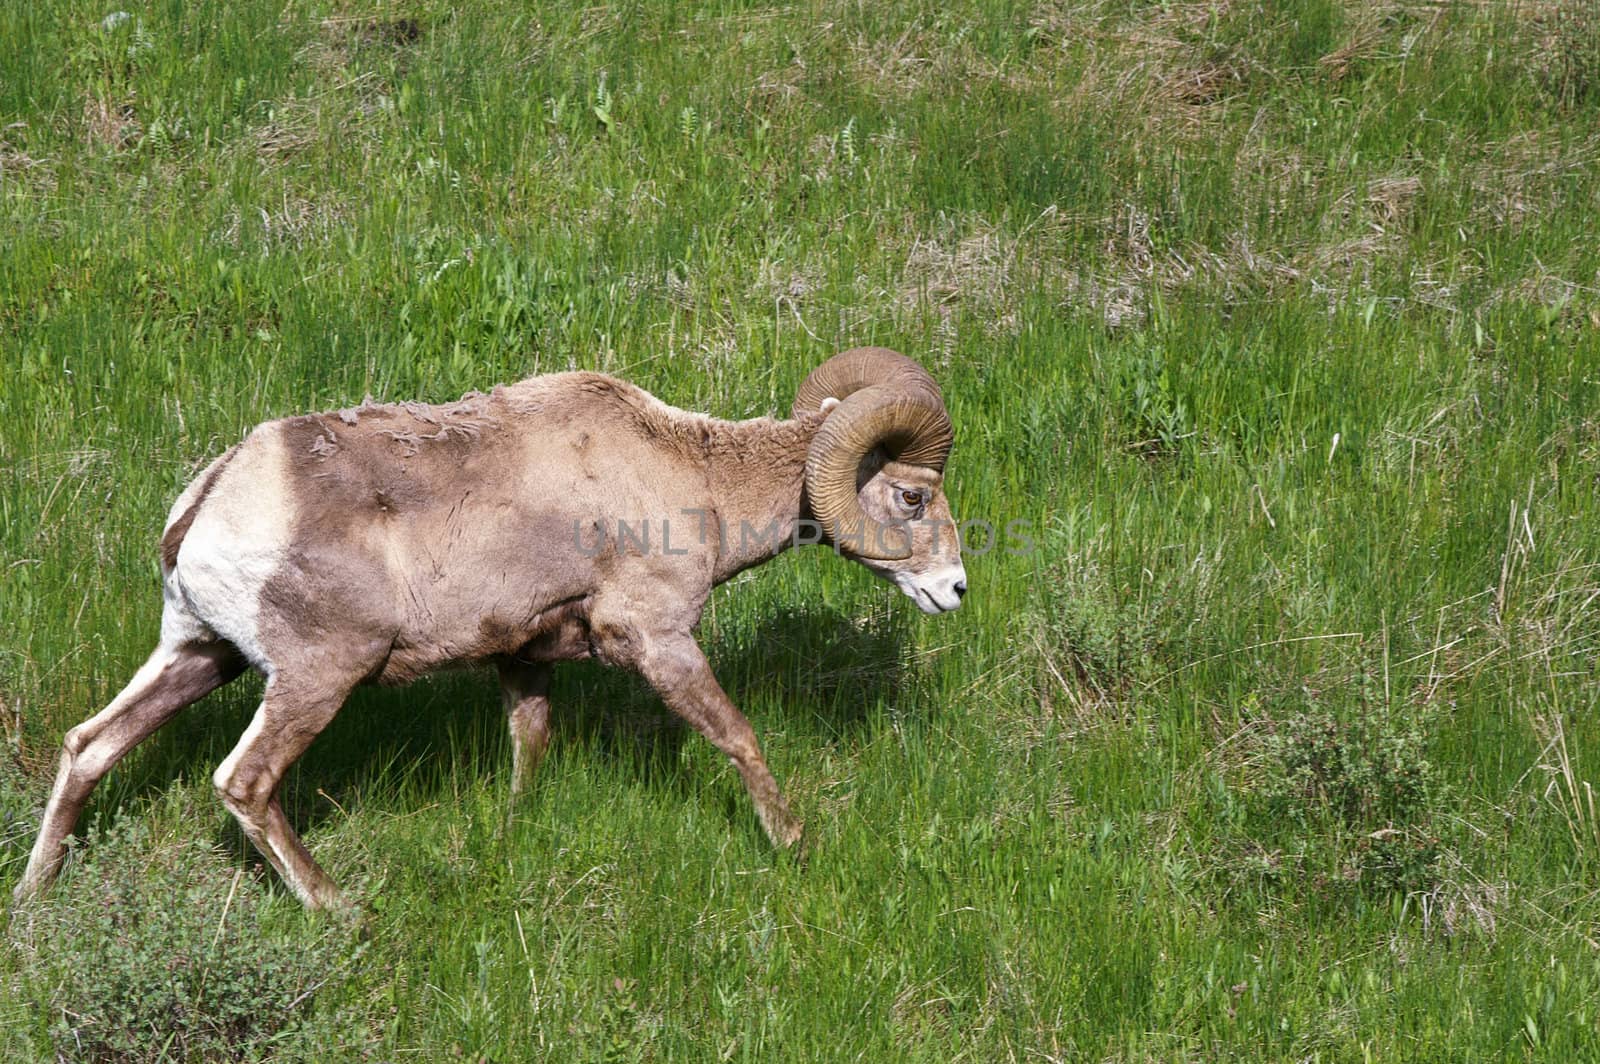 Bighorn Sheep grazes in meadow in Yellowstone Park USA